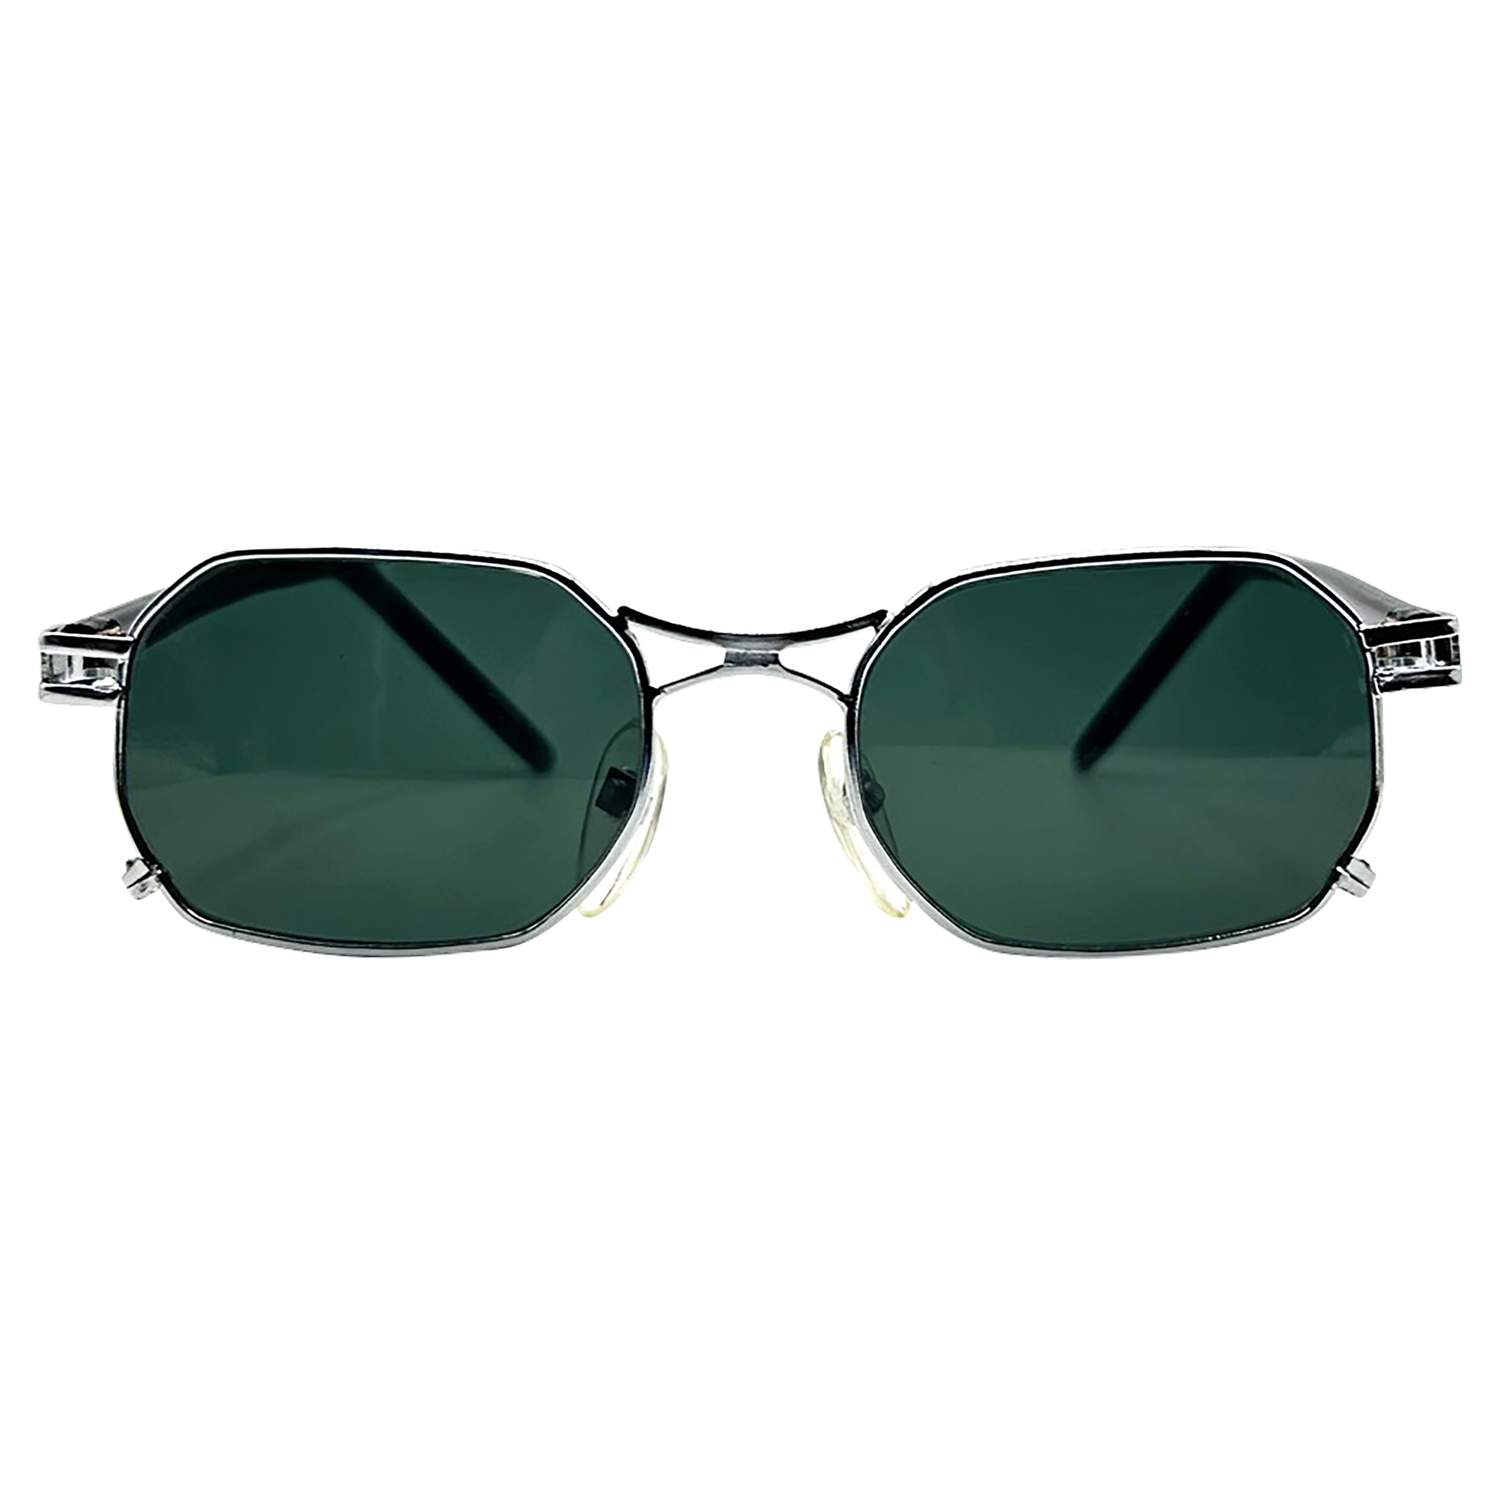 IDIOM Square Sunglasses